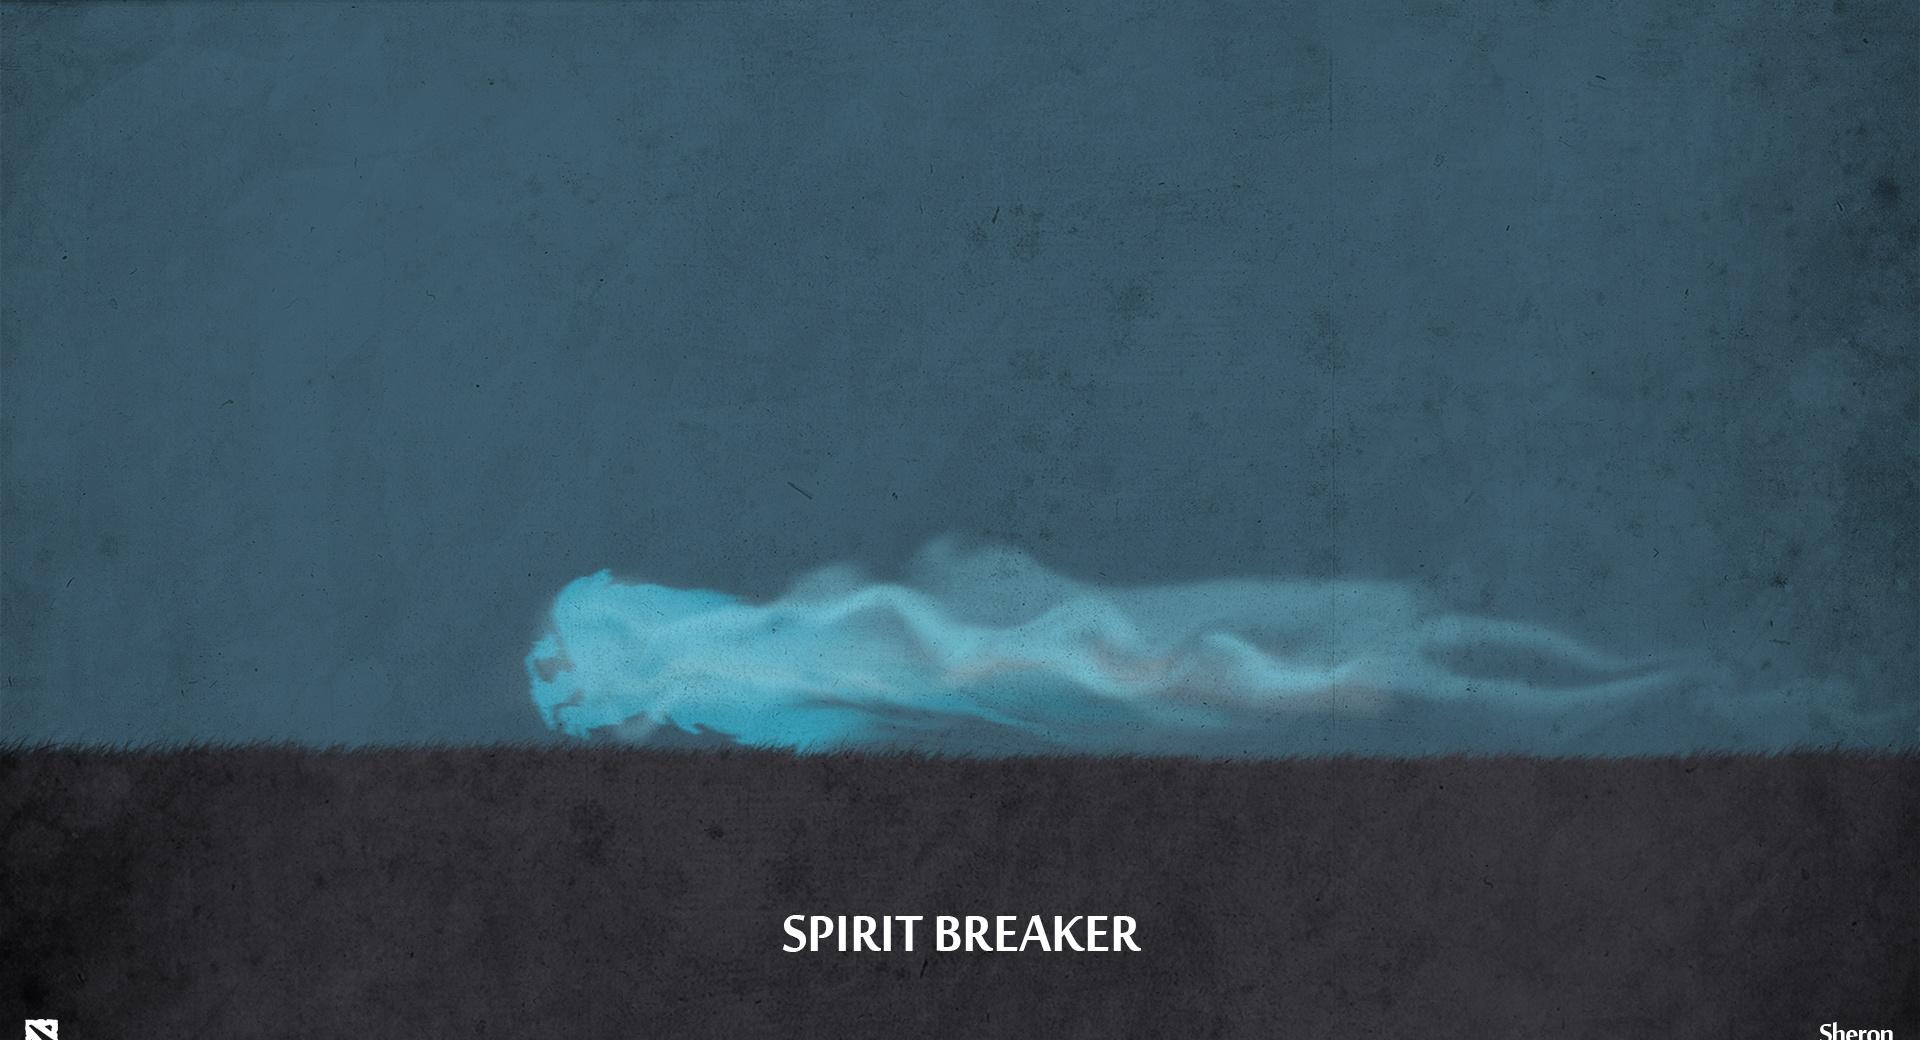 Spirit Breaker - DotA 2 at 1024 x 1024 iPad size wallpapers HD quality